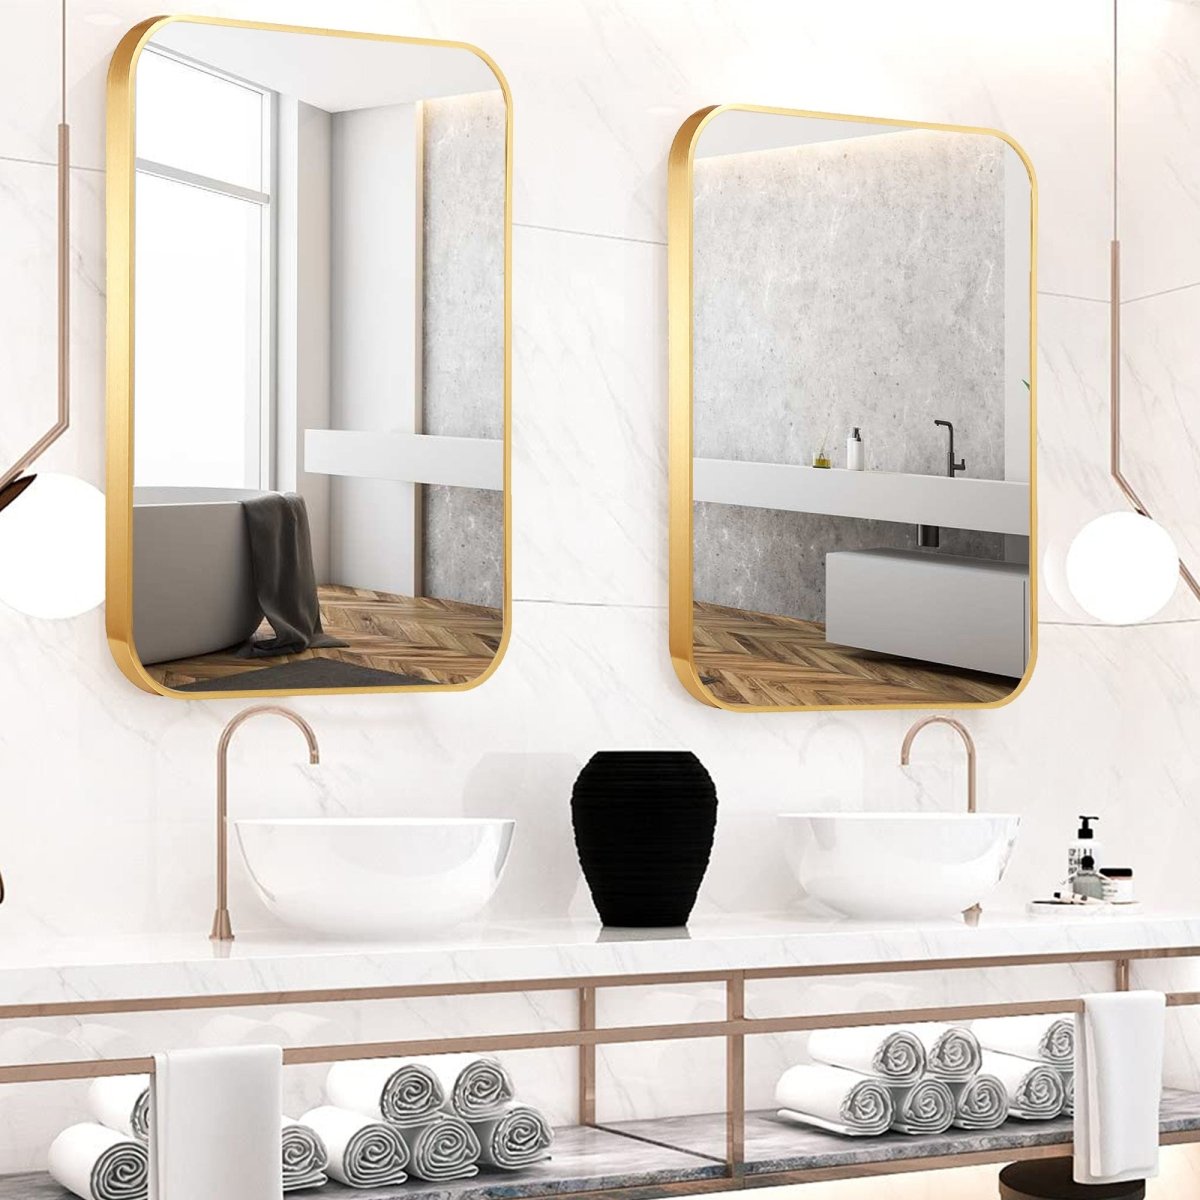 ExBrite 32 " W x 24 " H Gold Bathroom Mirror for Wall Vanity Mirror - ExBriteUSA